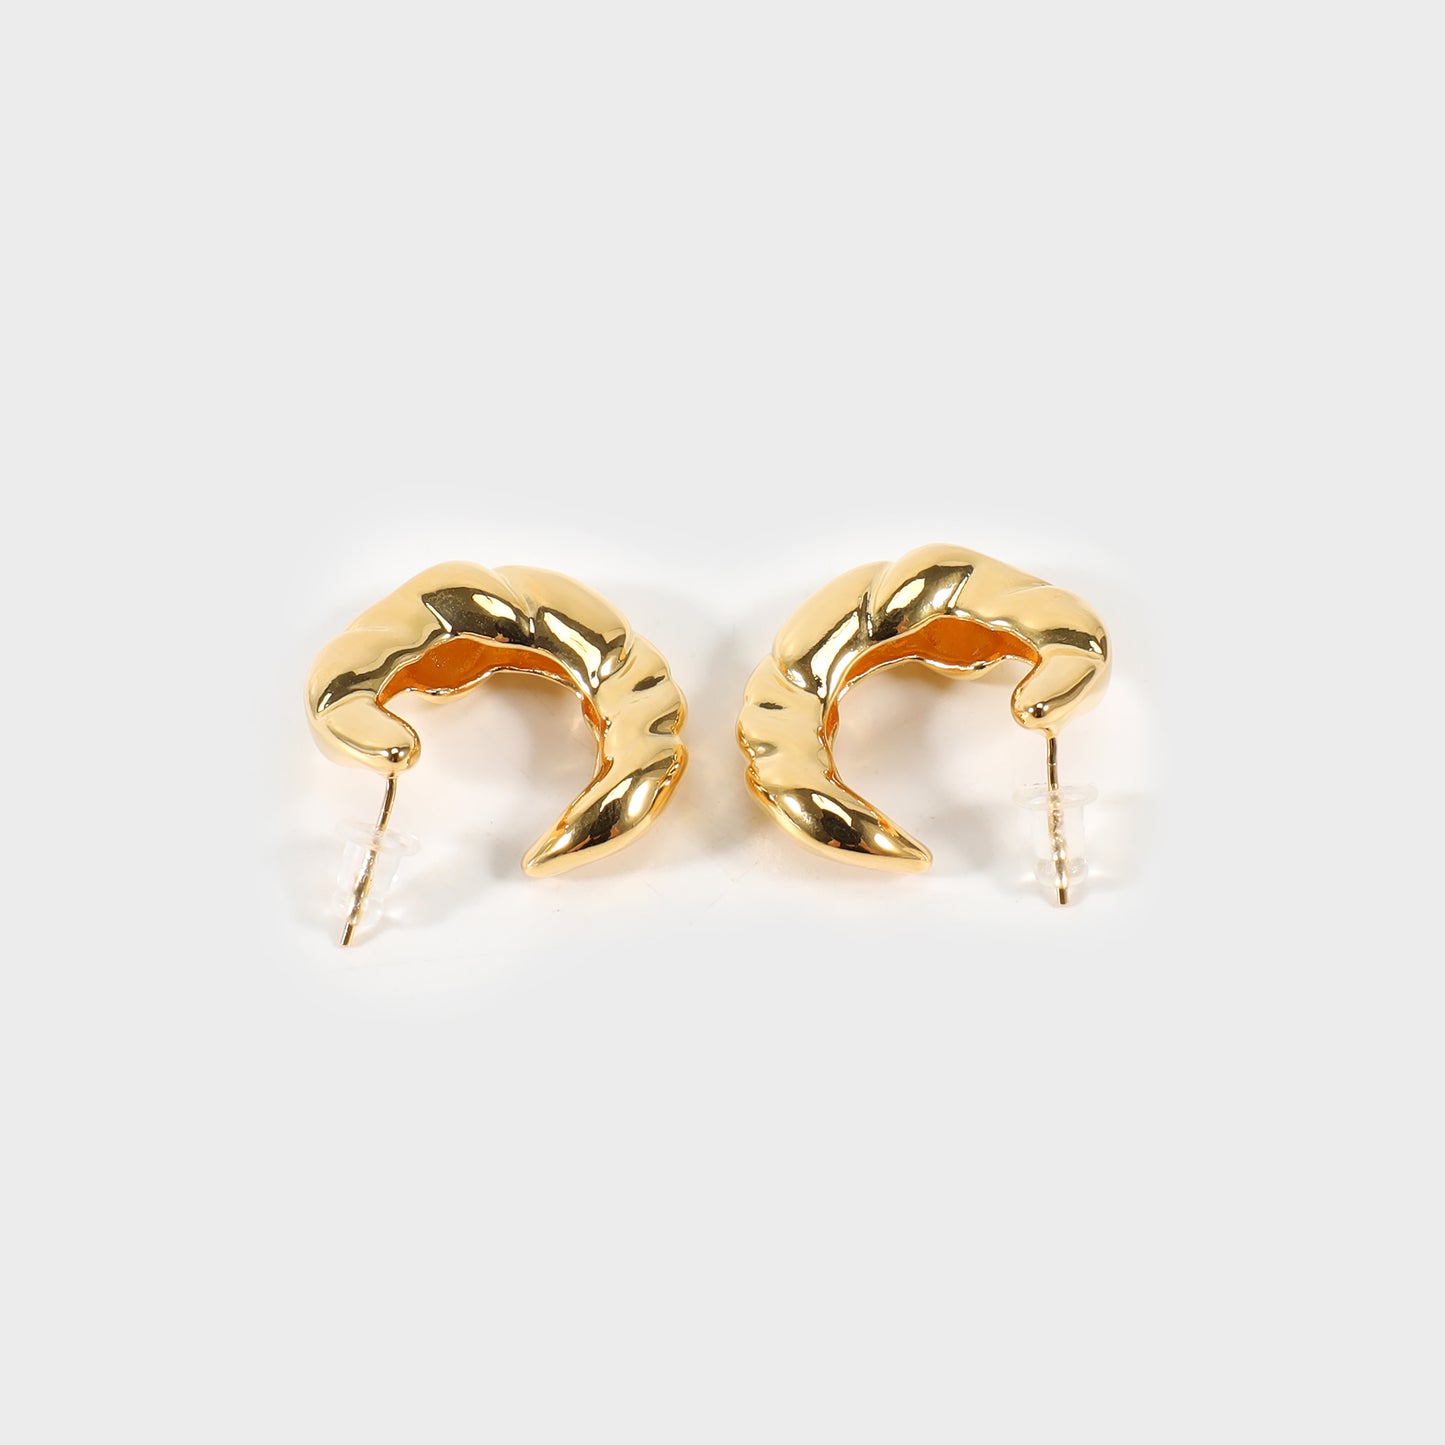 Gold croissant earrings